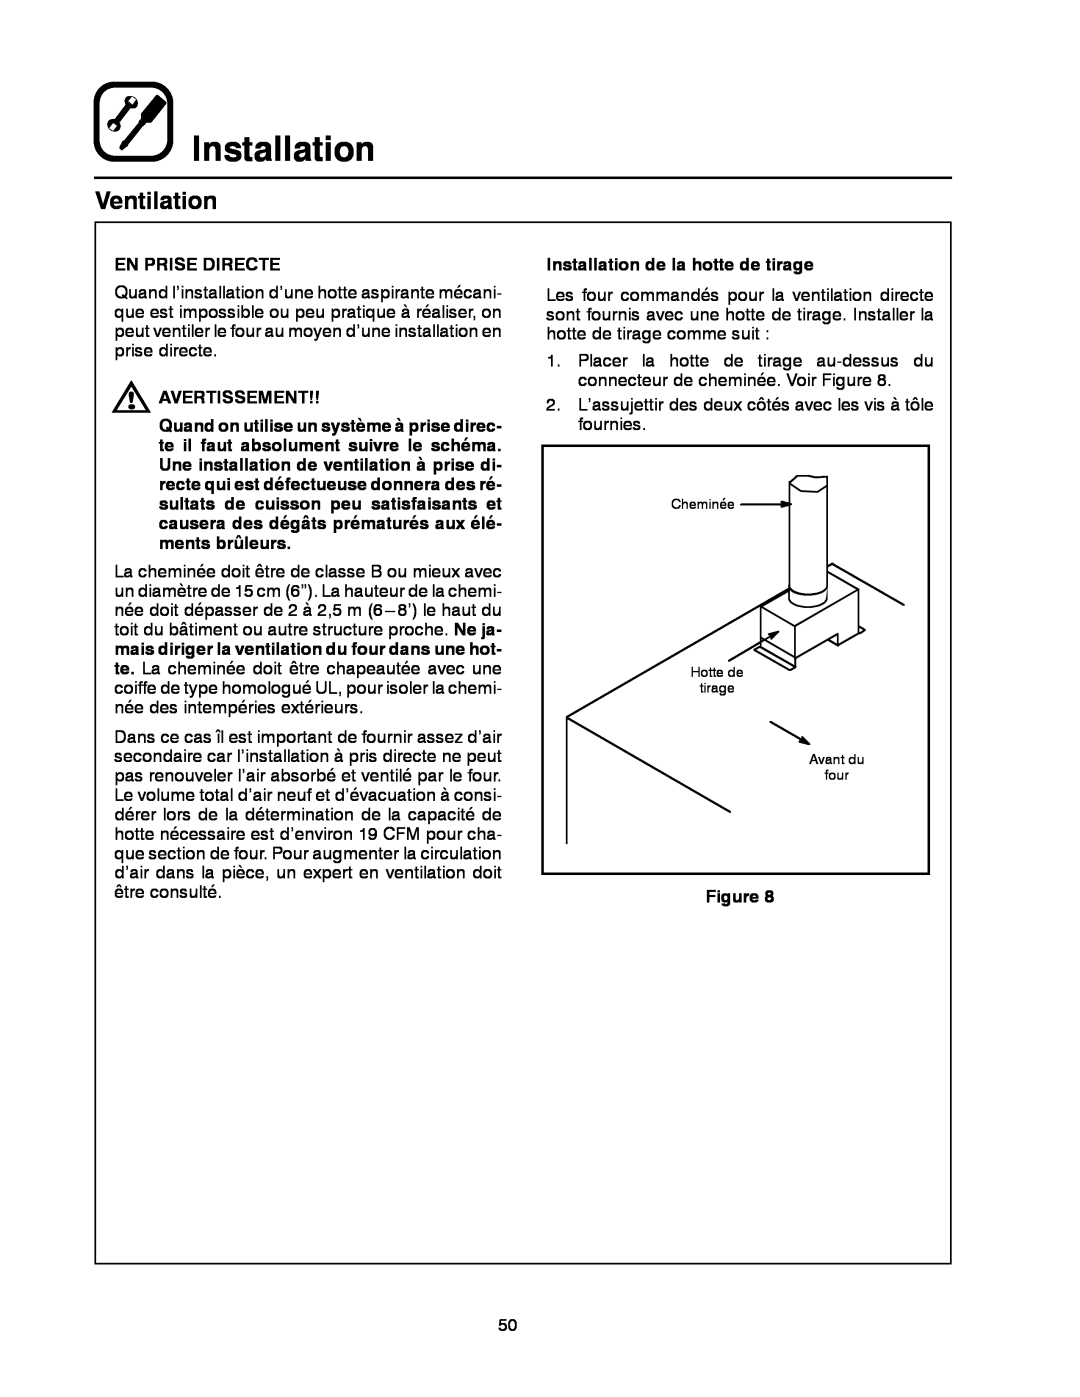 Blodgett DFG-50 manual Ventilation, En Prise Directe, Avertissement, Installation de la hotte de tirage 